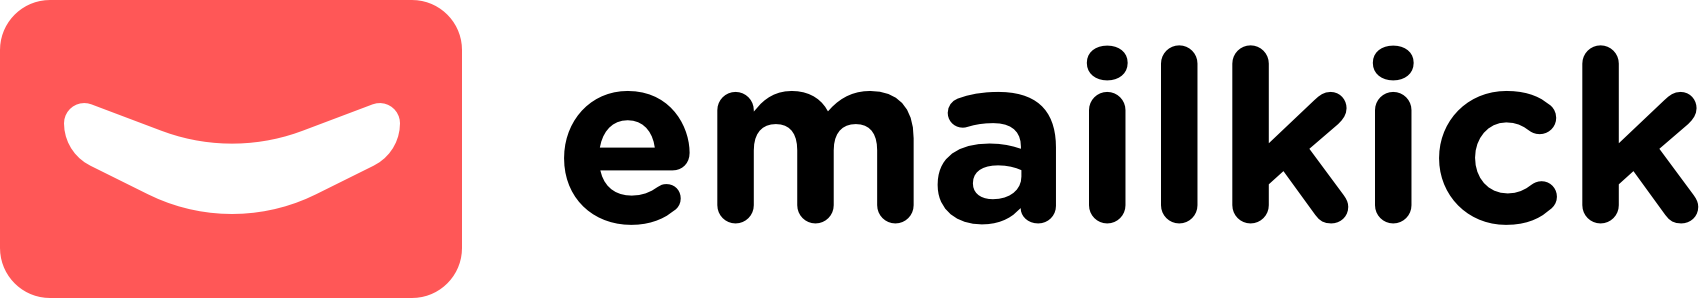 Emailkick Logo